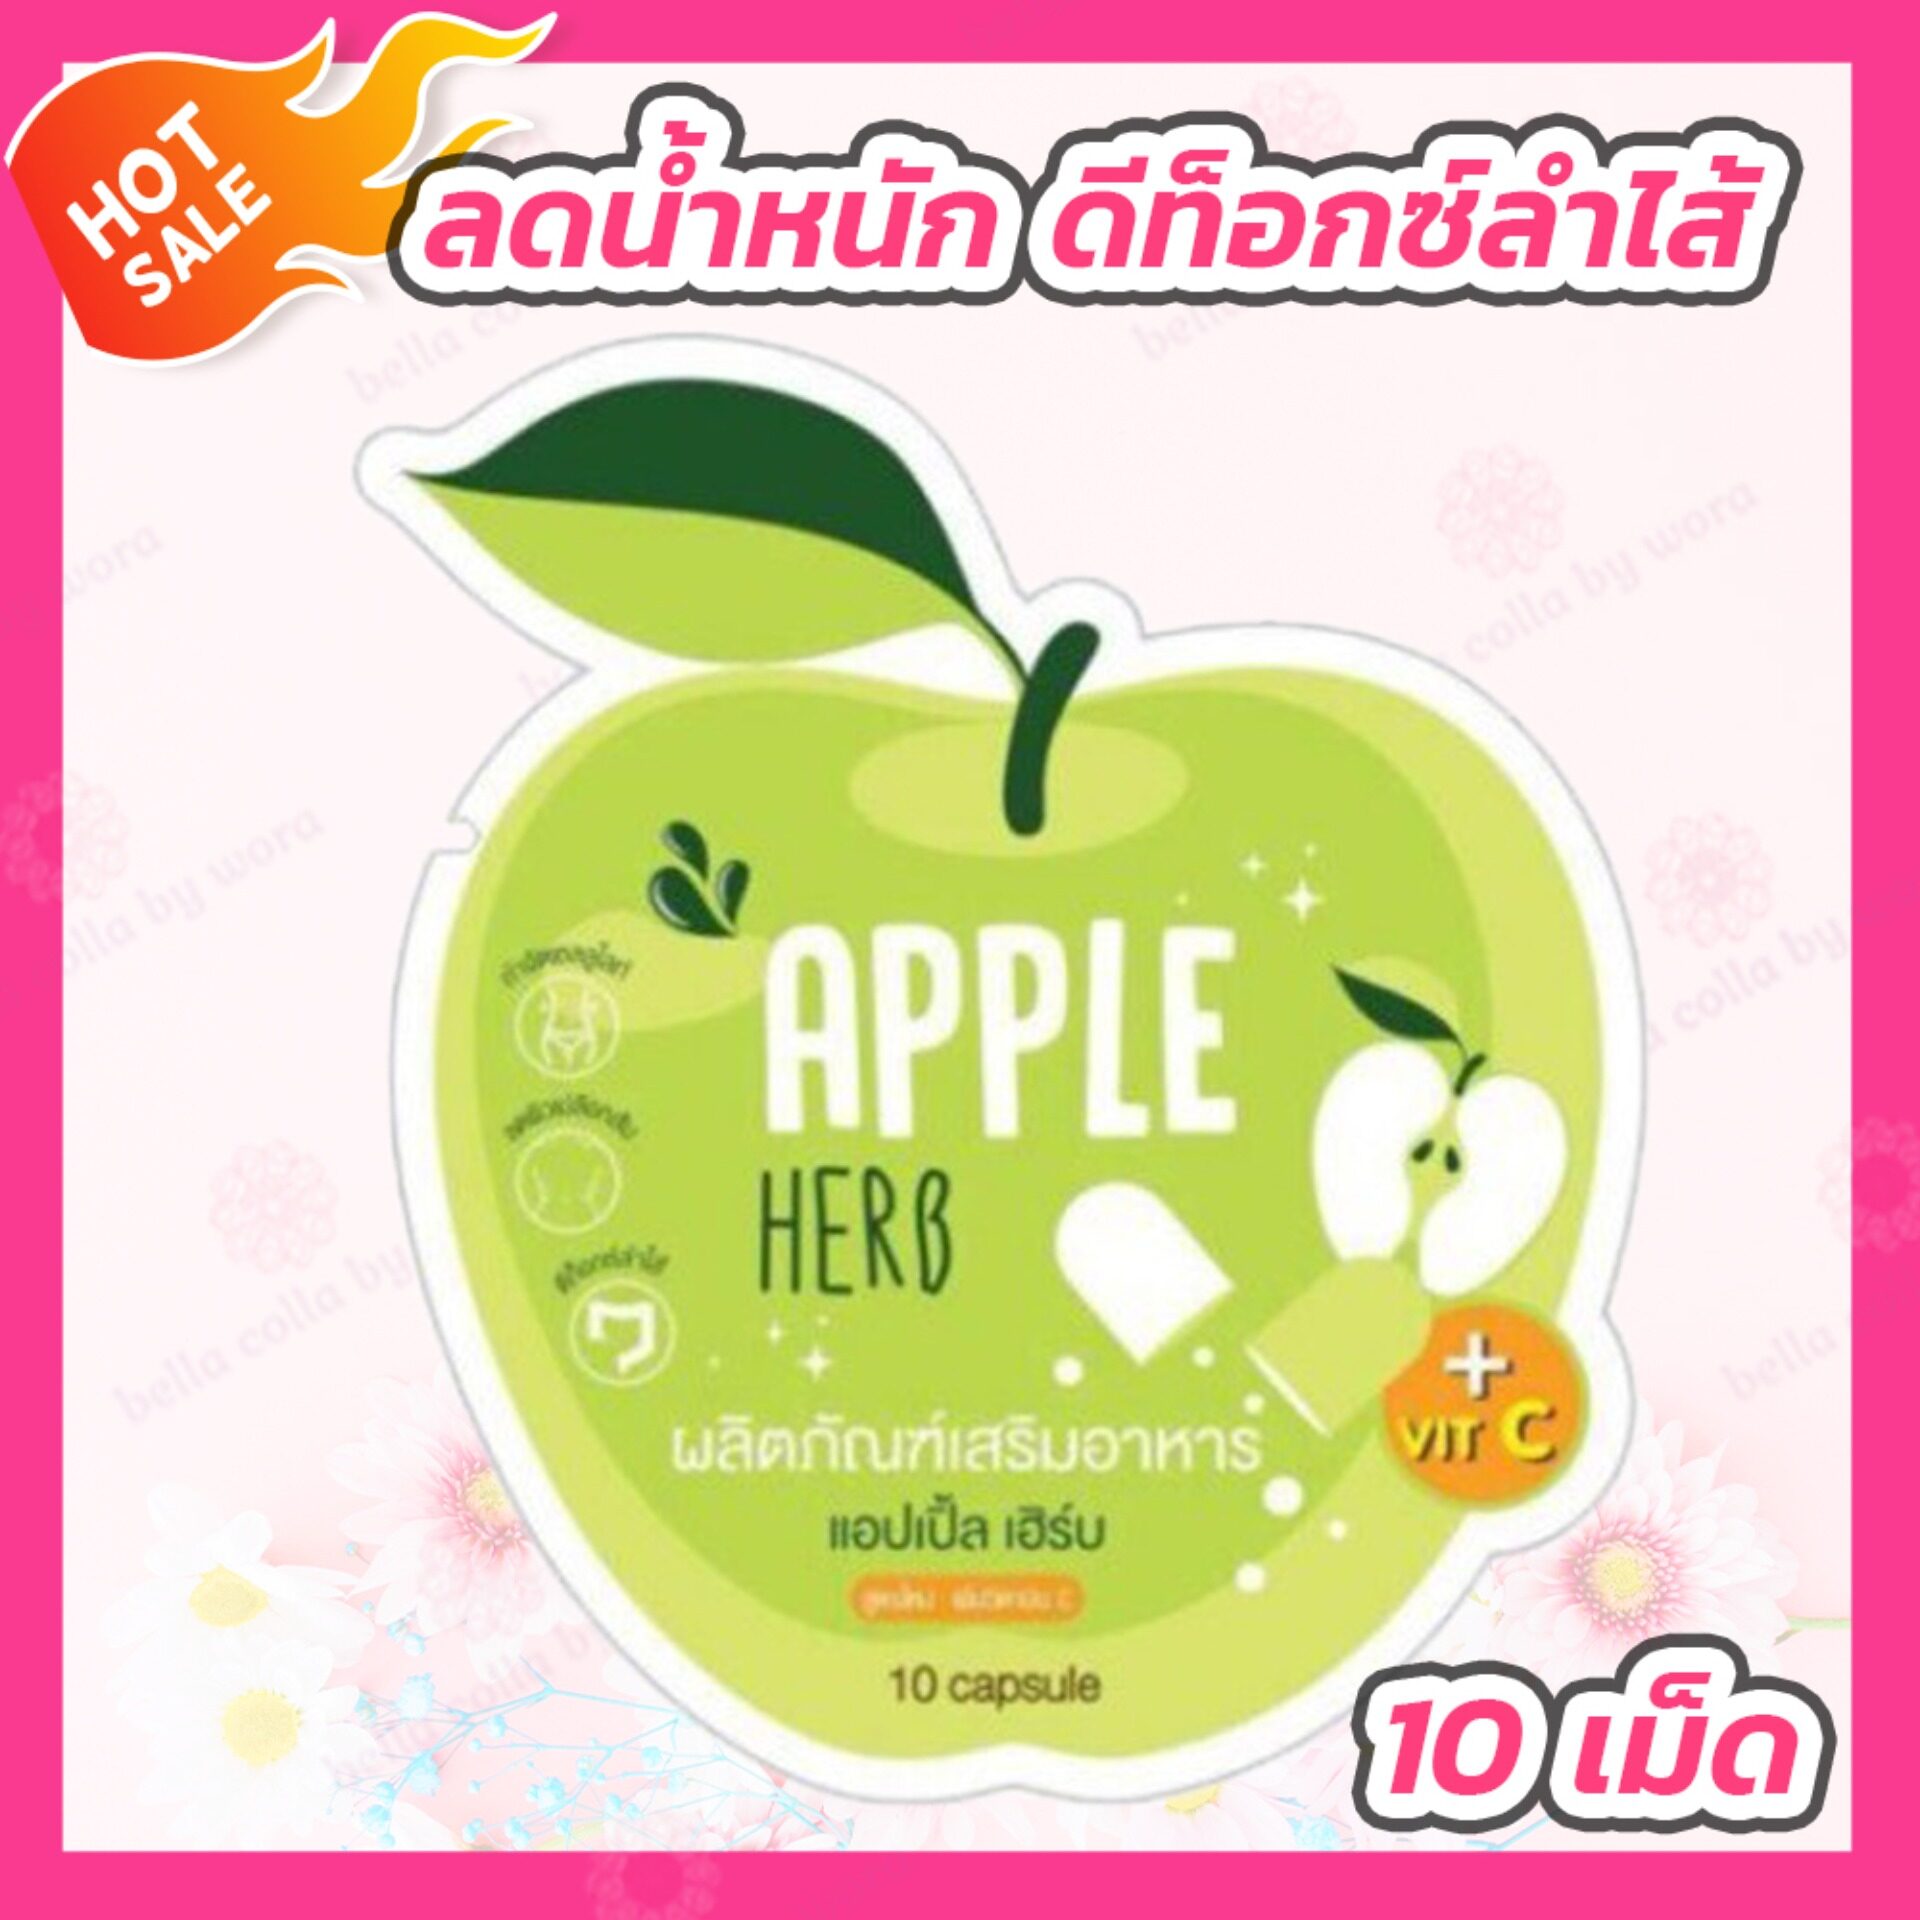 Apple Herb Detox [10 เม็ด] สมุนไพรแอปเปิ้ลเขียวดีท็อกซ์